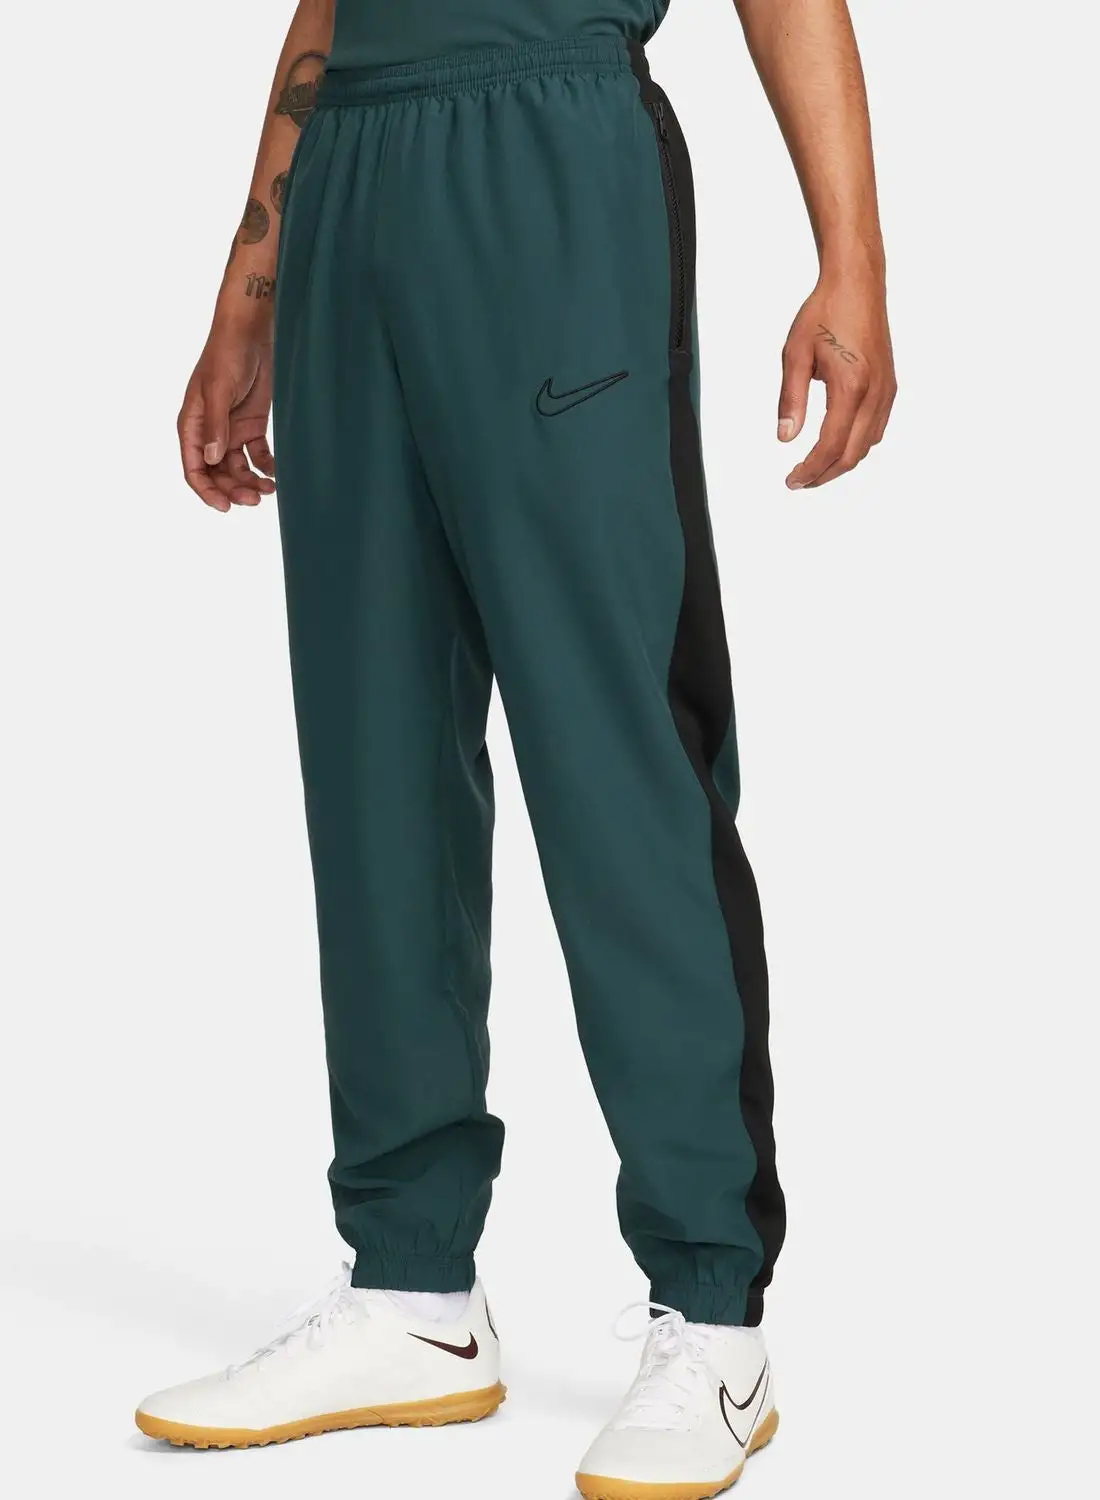 Nike Dri-Fit Acd23 Pants